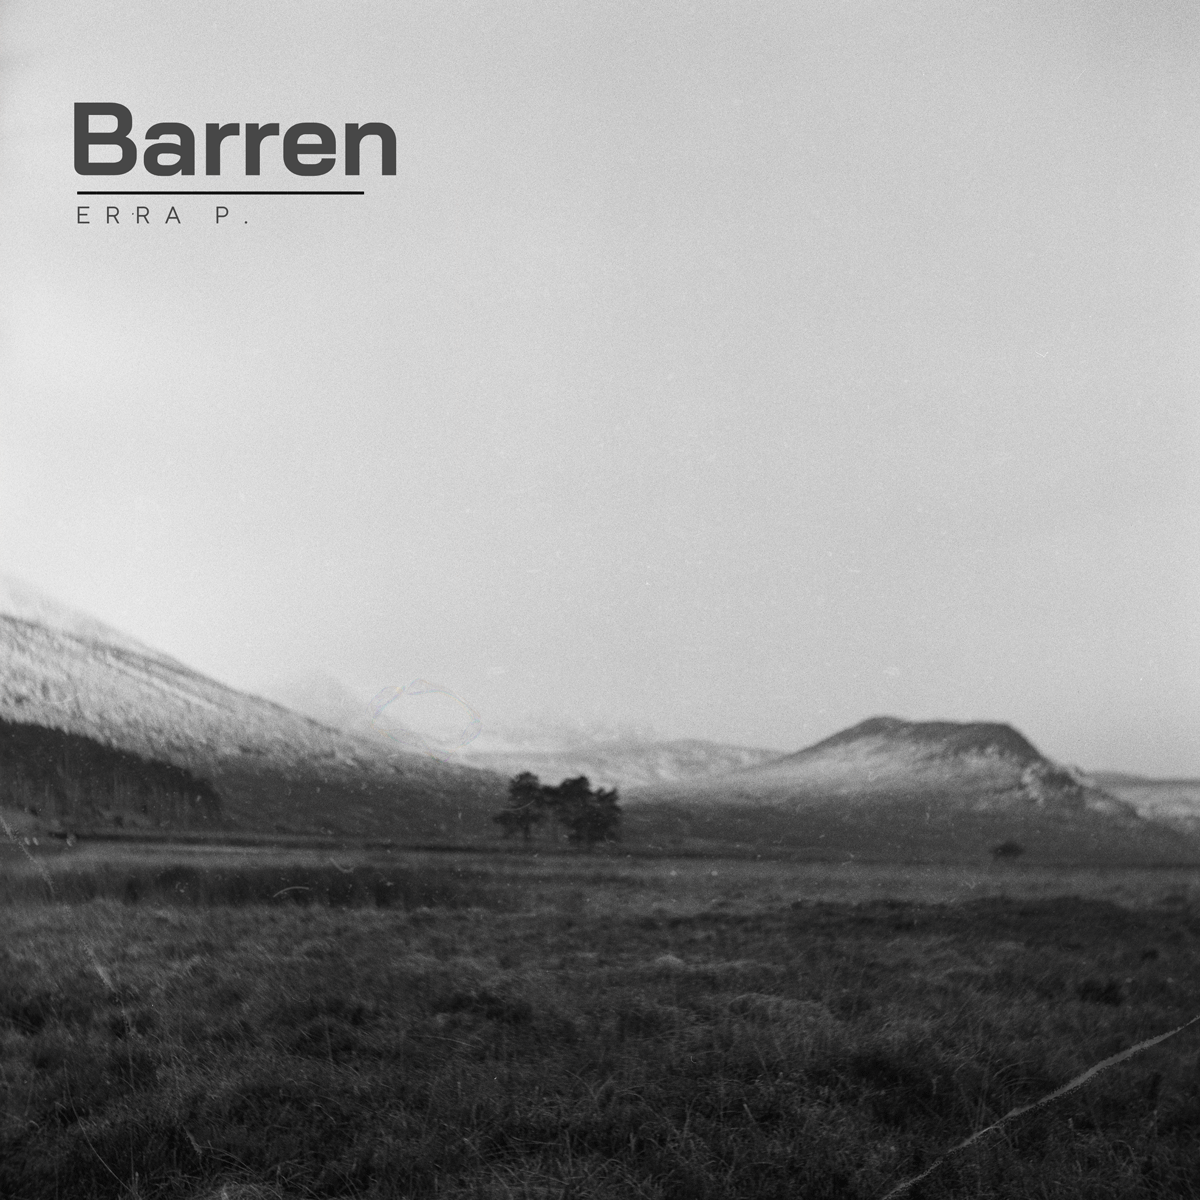 "Barren" is the electrifying new album from Irish duo Erra P